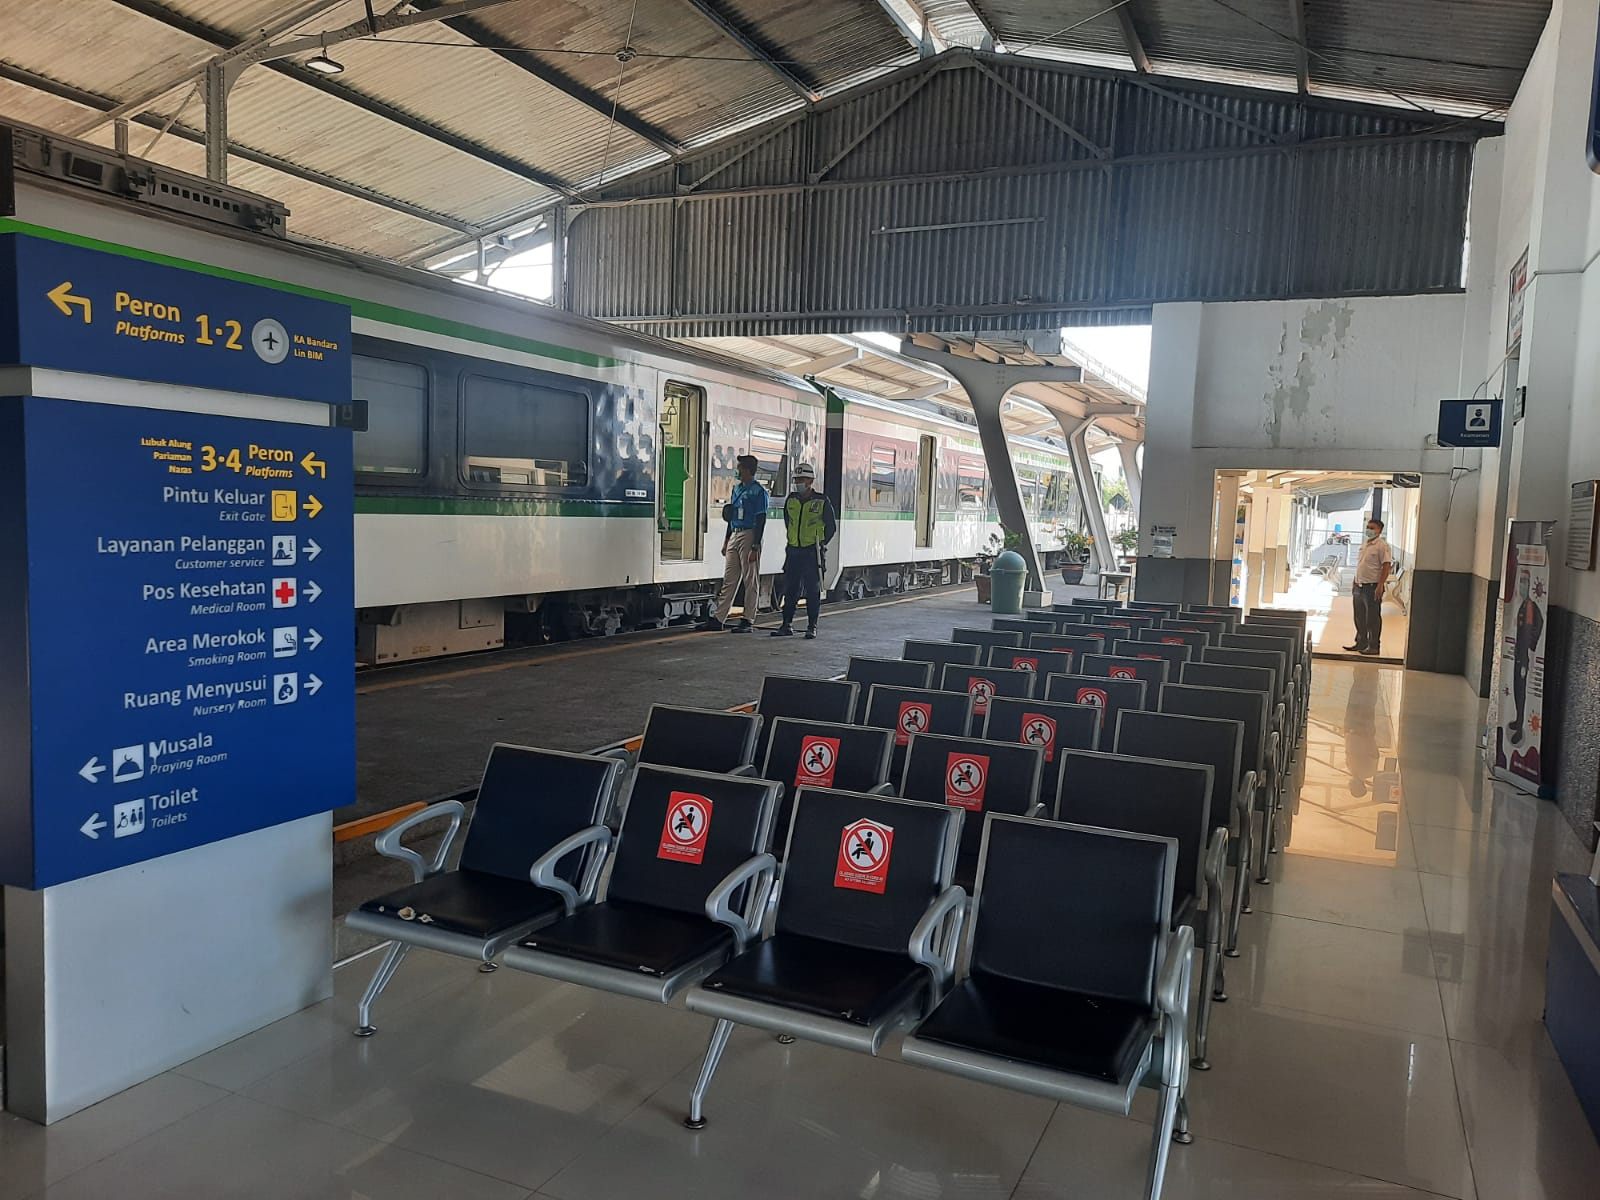 Ruang tunggu di Stasiun Padang diatur jarak bangku antar penumpang demi menjaga jarak dan memutus matacrantai penularan virus Covid-19. (Foto: Dok. KAI Divre II Sumbar)